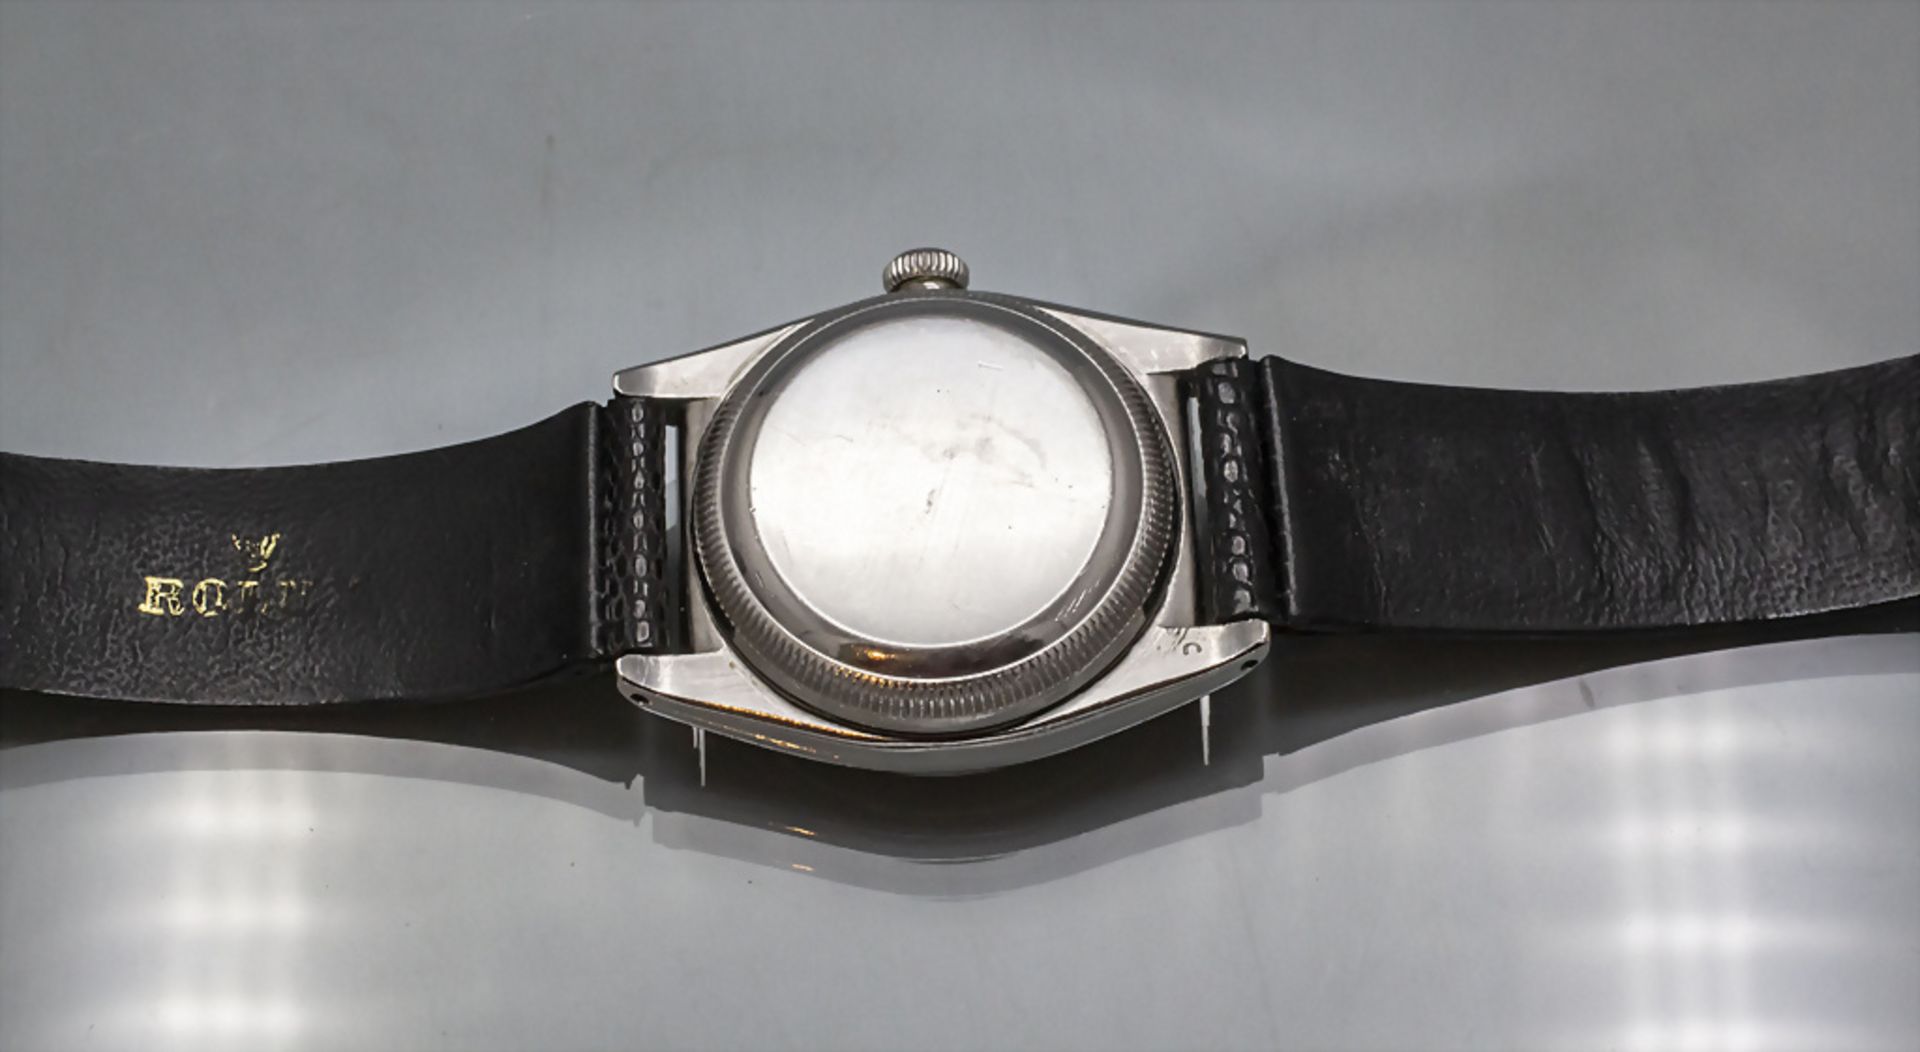 Rolex Bubbleback Oyster Perpetual Chronometer, Schweiz / Swiss, um 1950 - Image 7 of 8